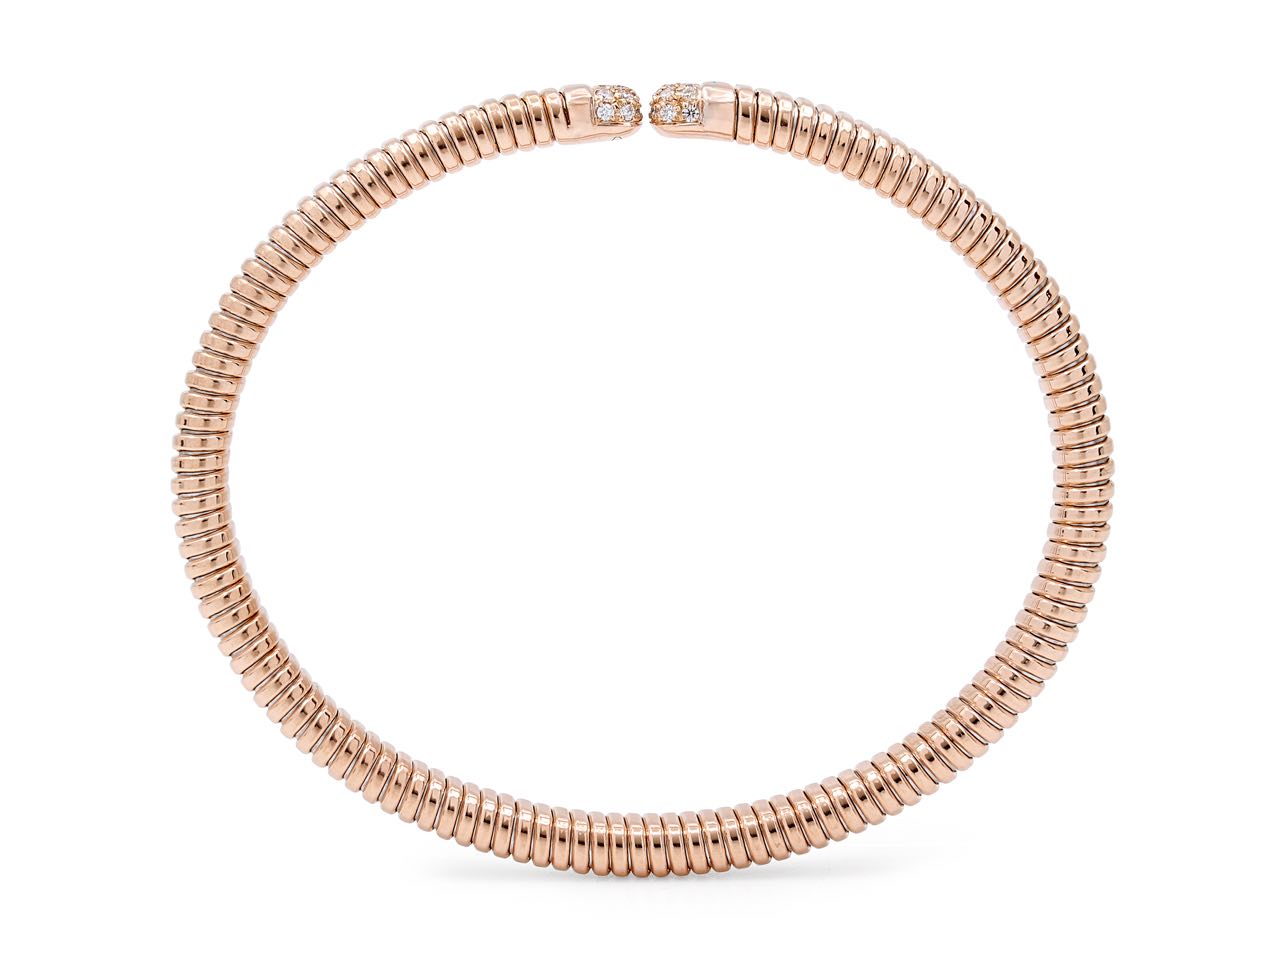 Tubogas Diamond Bracelet in 18K Rose Gold, Small, by Beladora